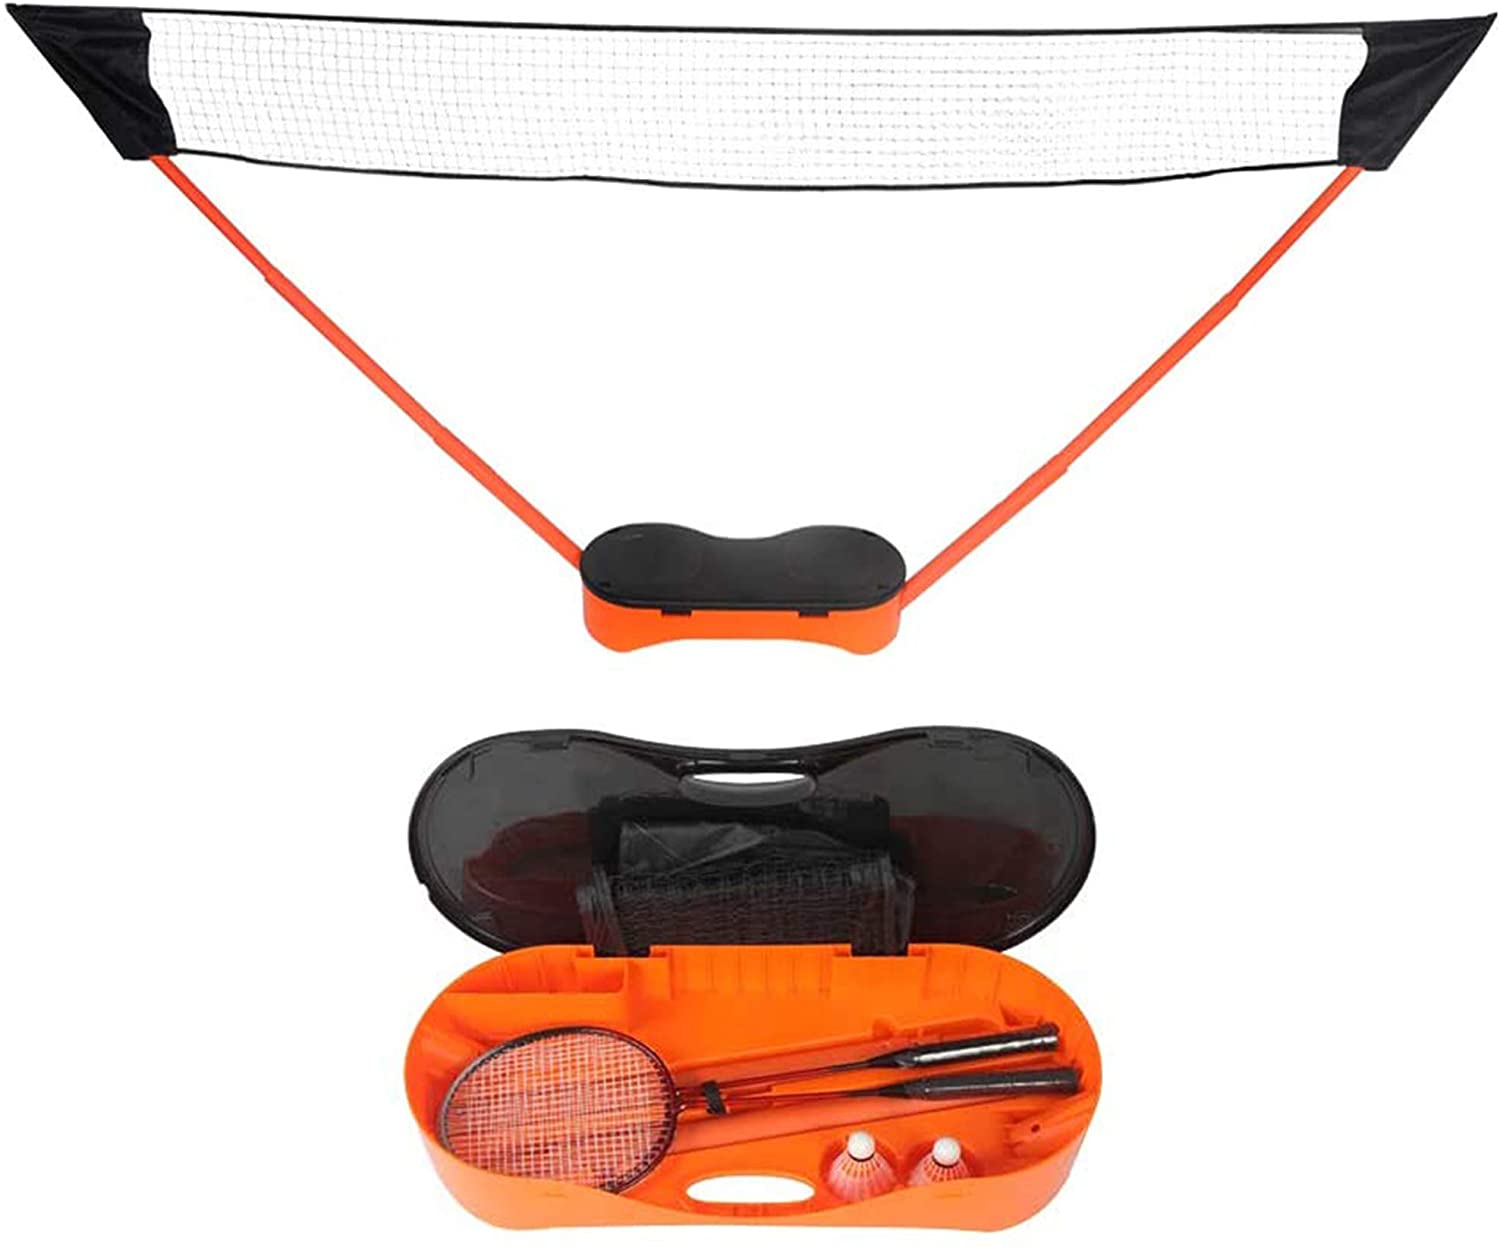 Portable Badminton Net Set Storage Box Base with 2 Battledores 2 Shuttlecocks Large 10x5 Feet Net for Ball Games Outdoor Team Sports